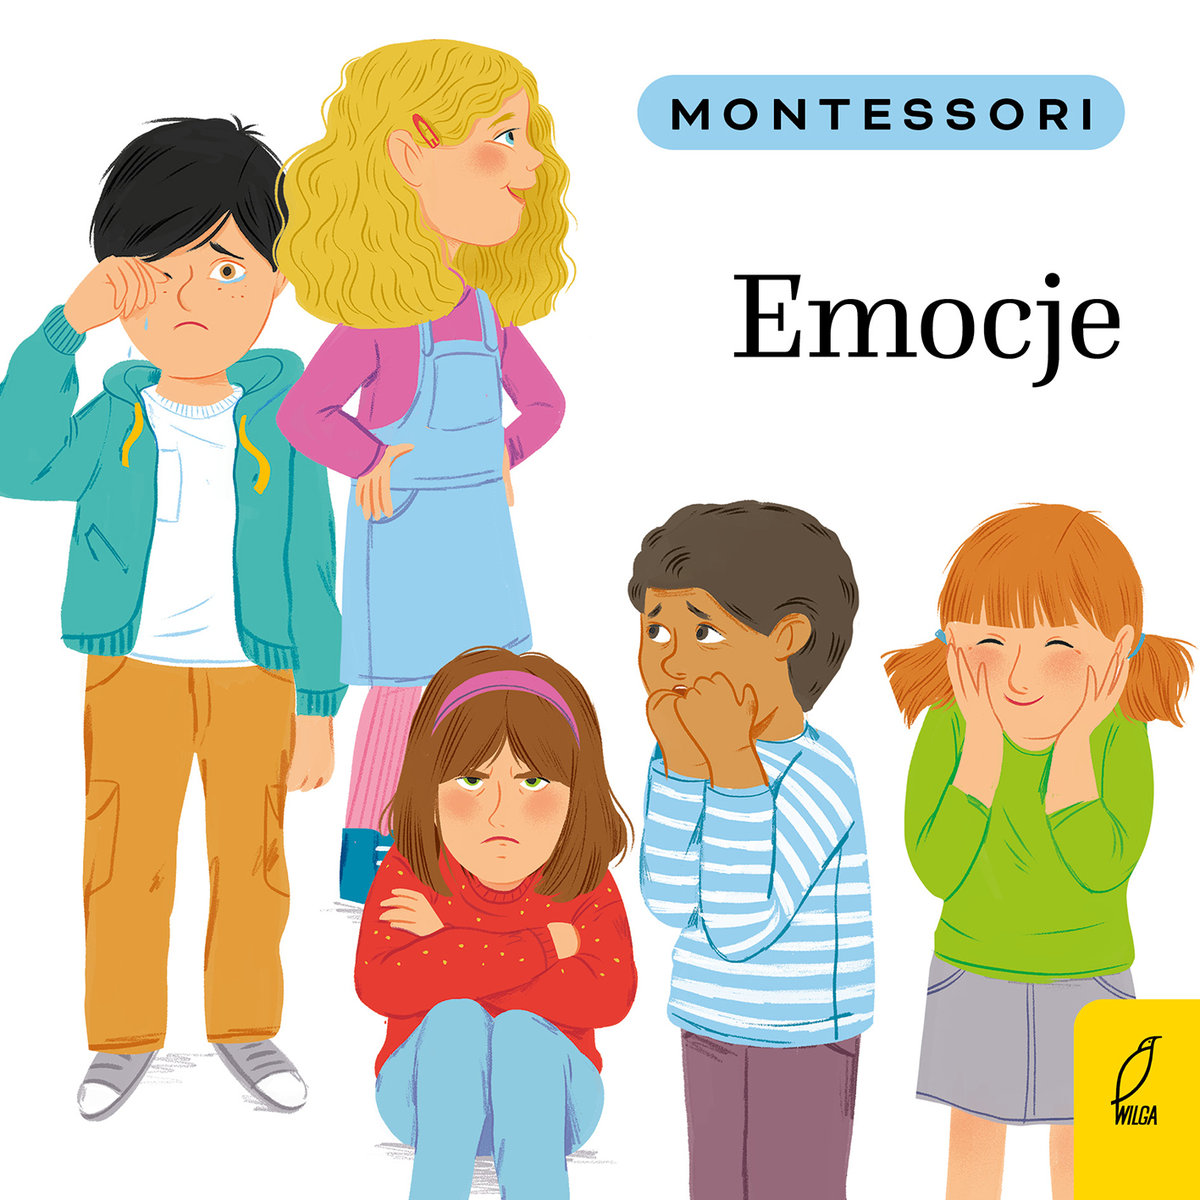 Montessori Emocje by . 